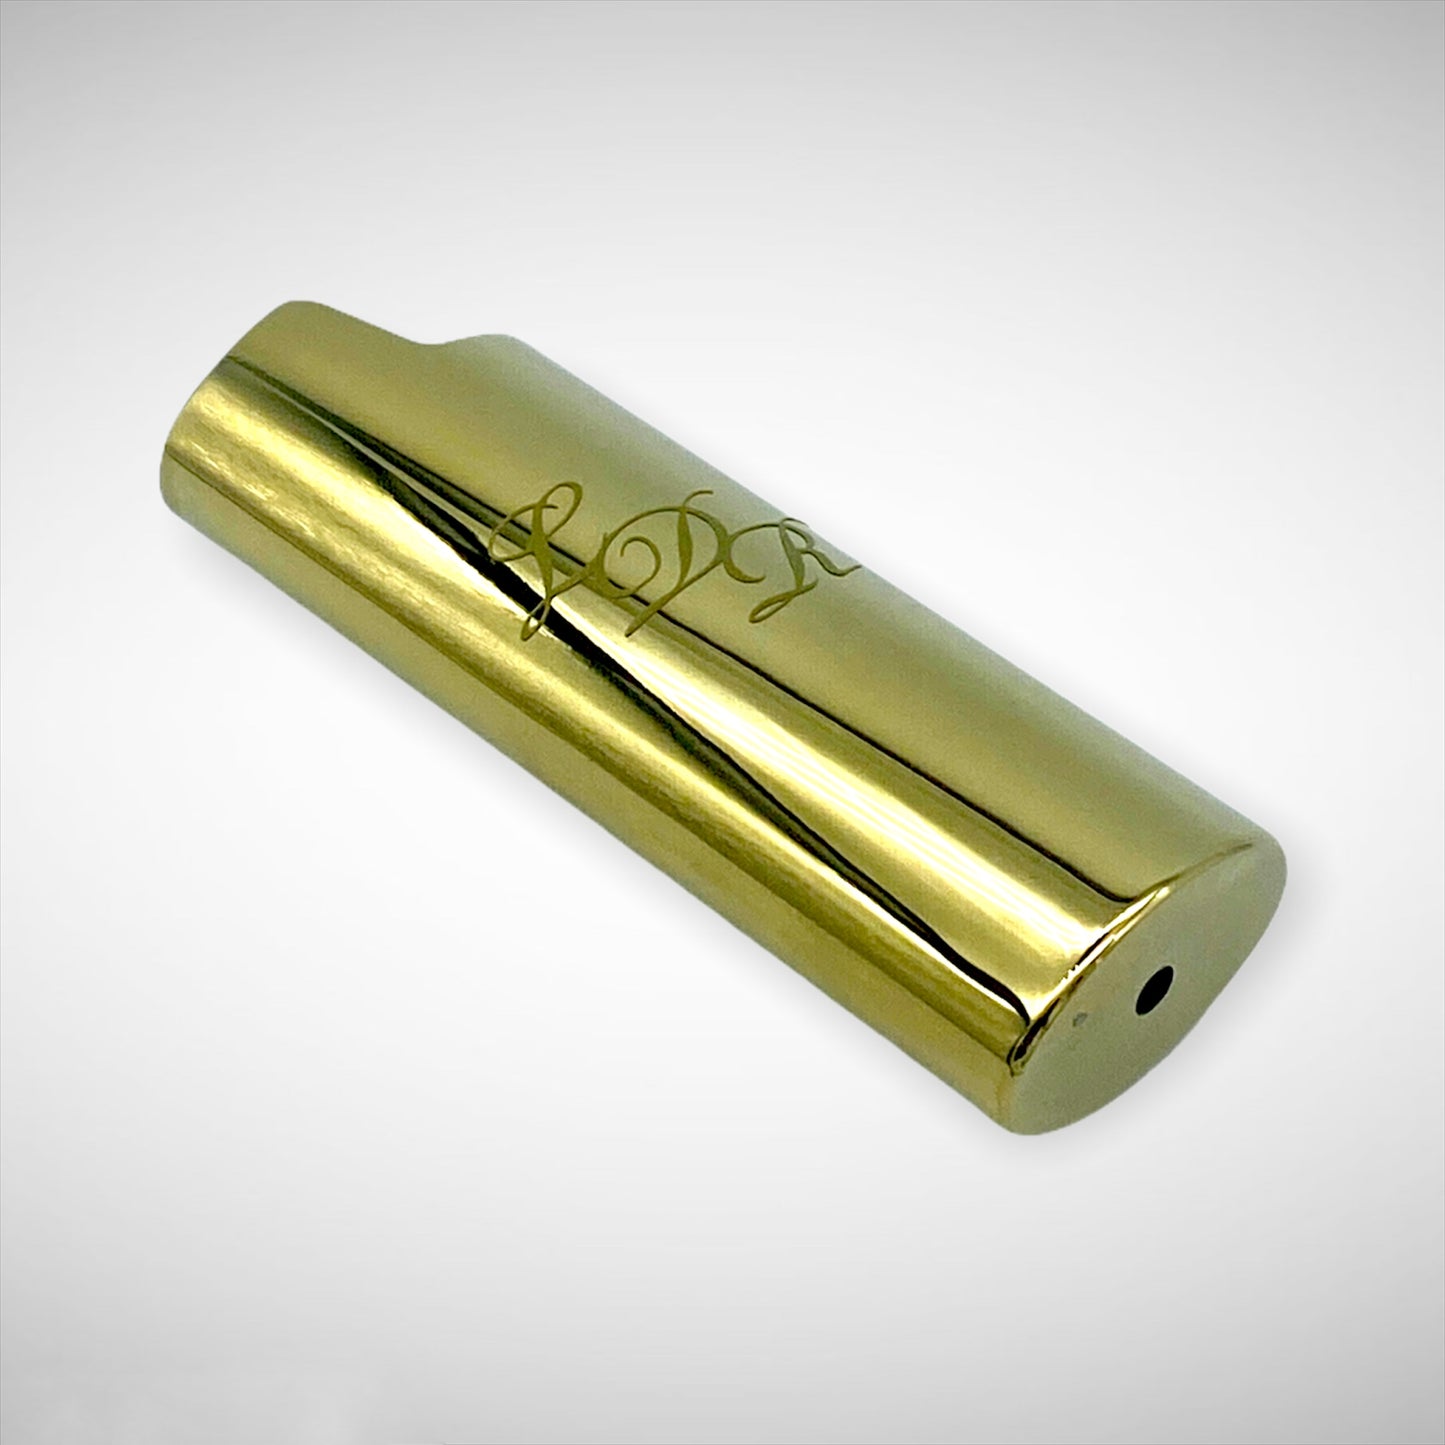 LDR Gold Chrome Bic Lighter Case